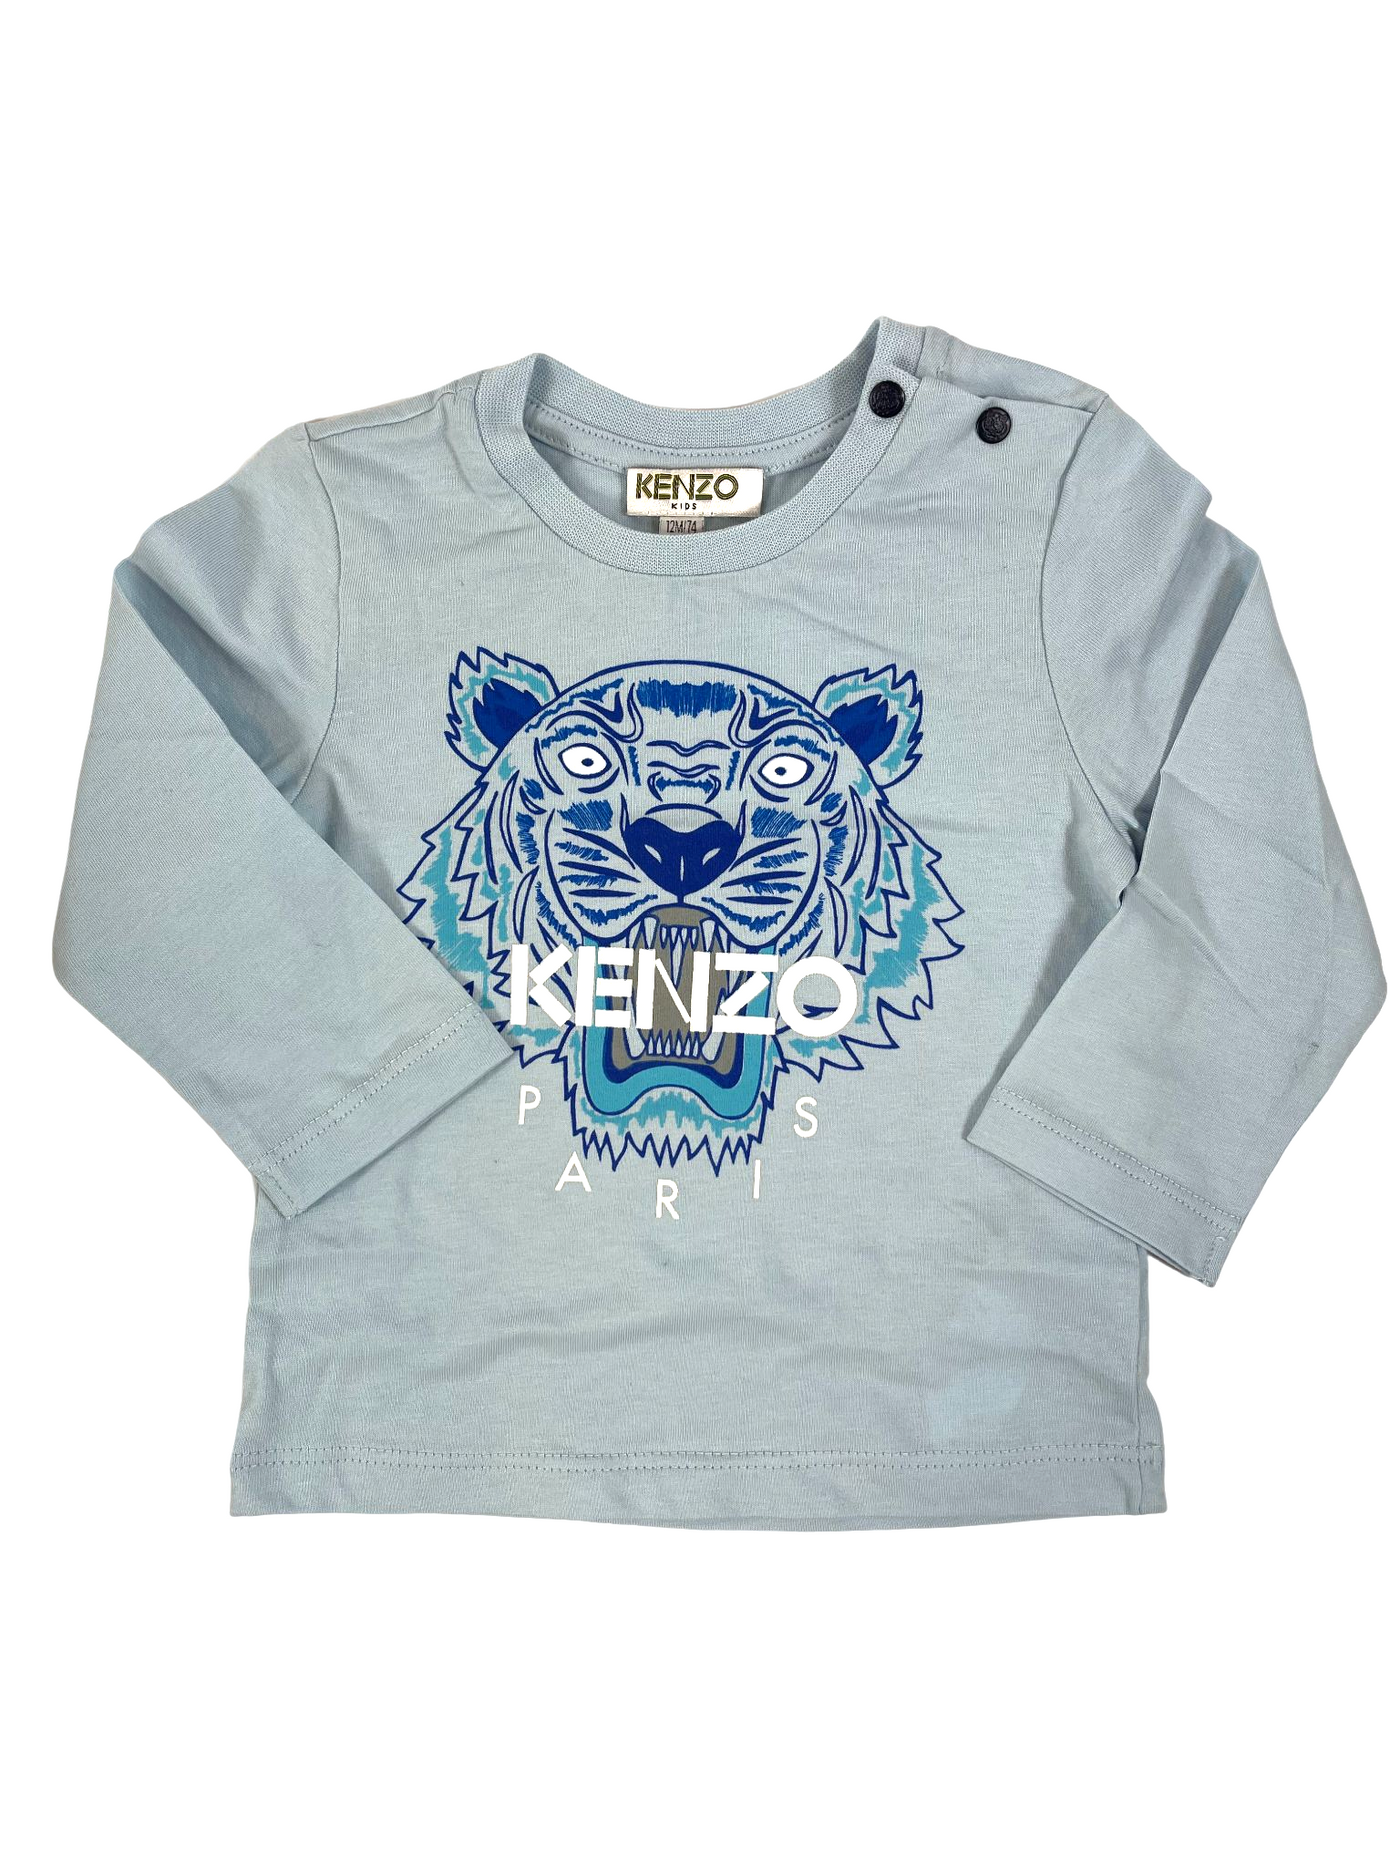 Kenzo Baby Shortsleeve Shirt(12M)